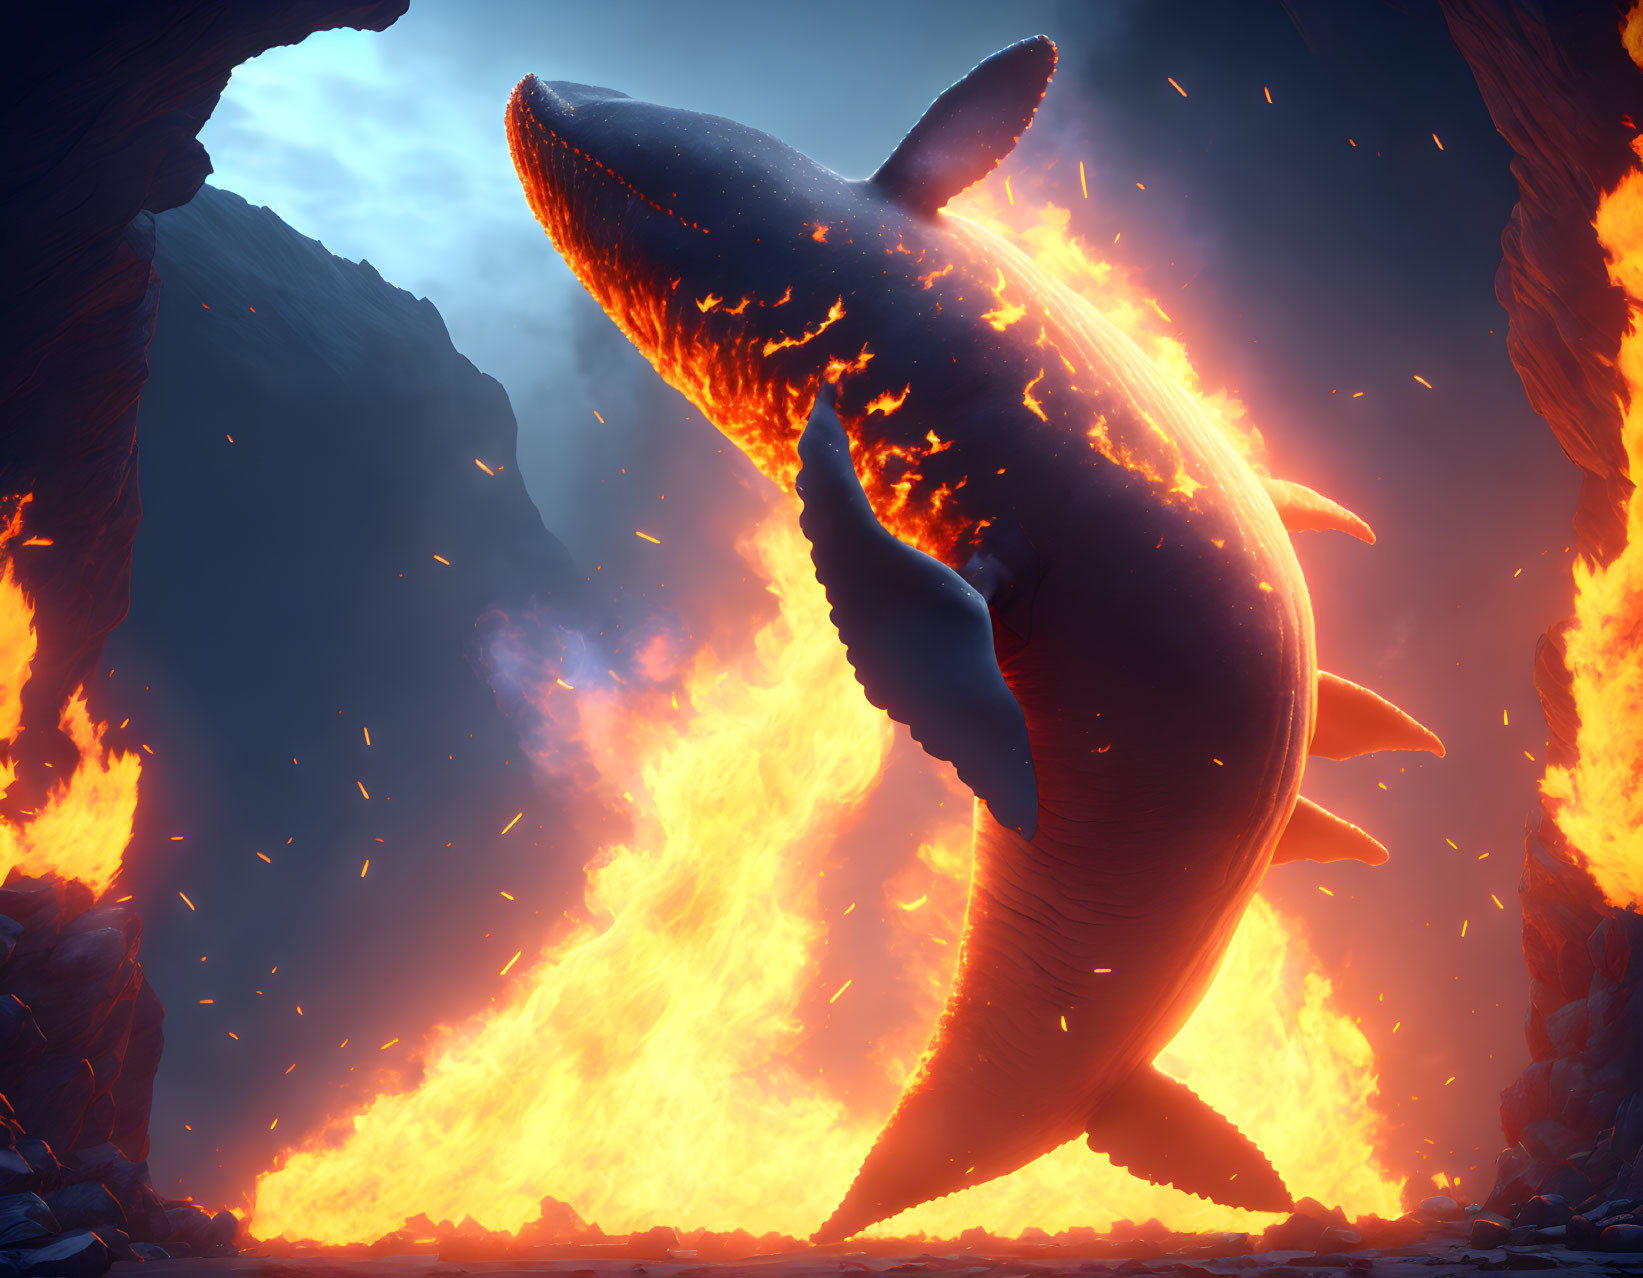 The lava whale